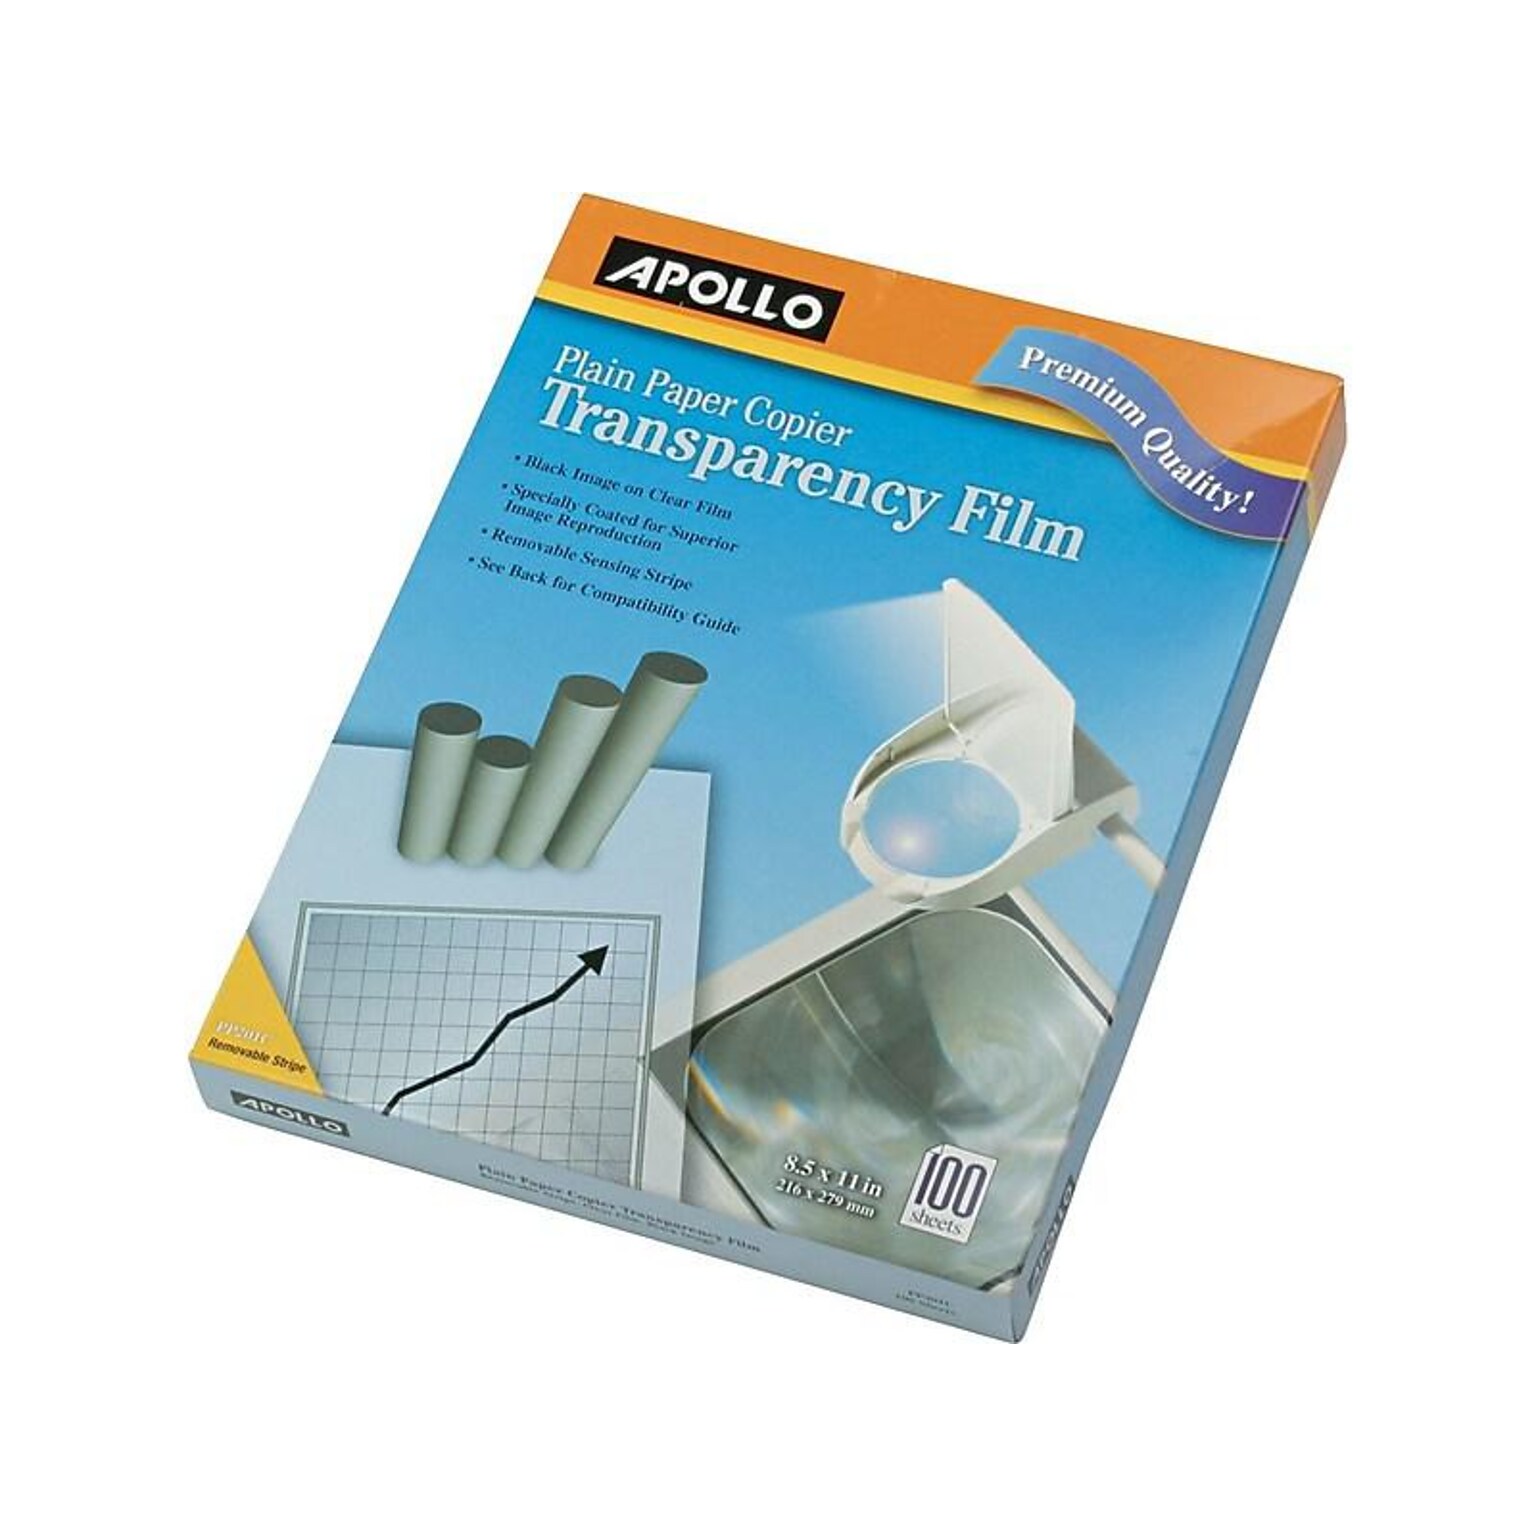 Apollo Transparency Film with Removable Sensing Stripe, 8.5 x 11, 100/Box (PP201C)